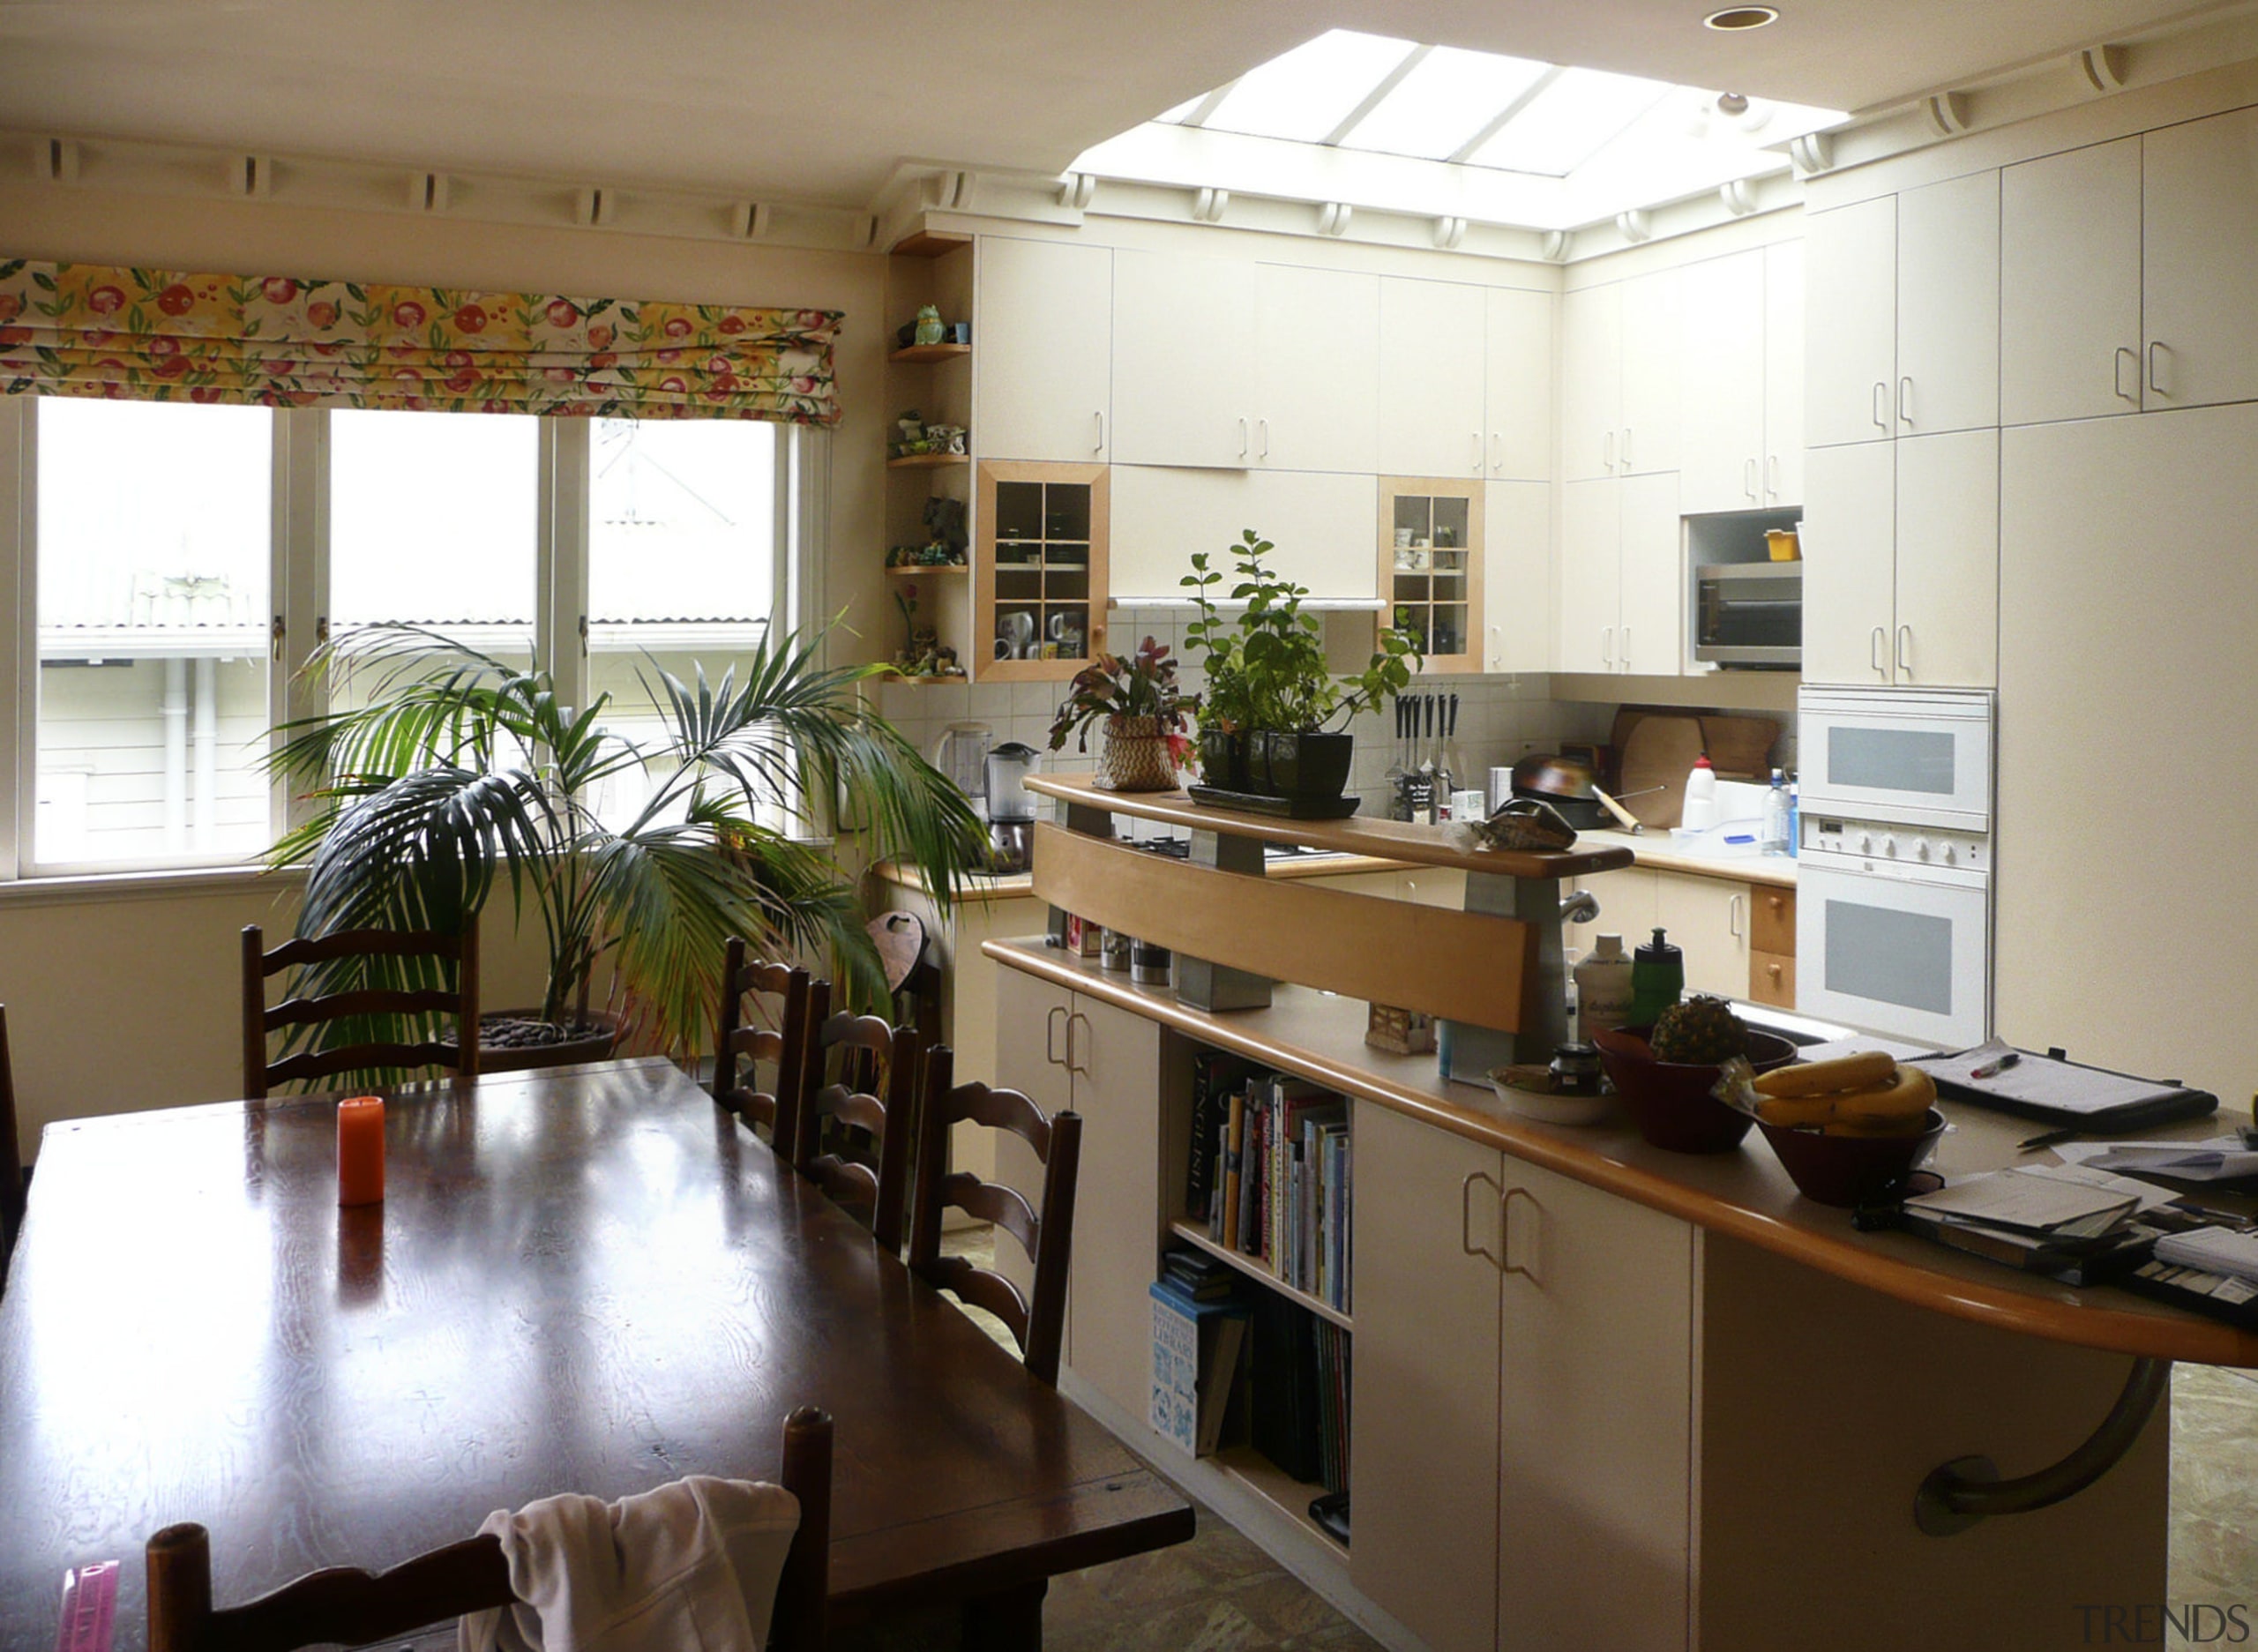 View of the kitchen prior to renovation. - furniture, interior design, brown, white